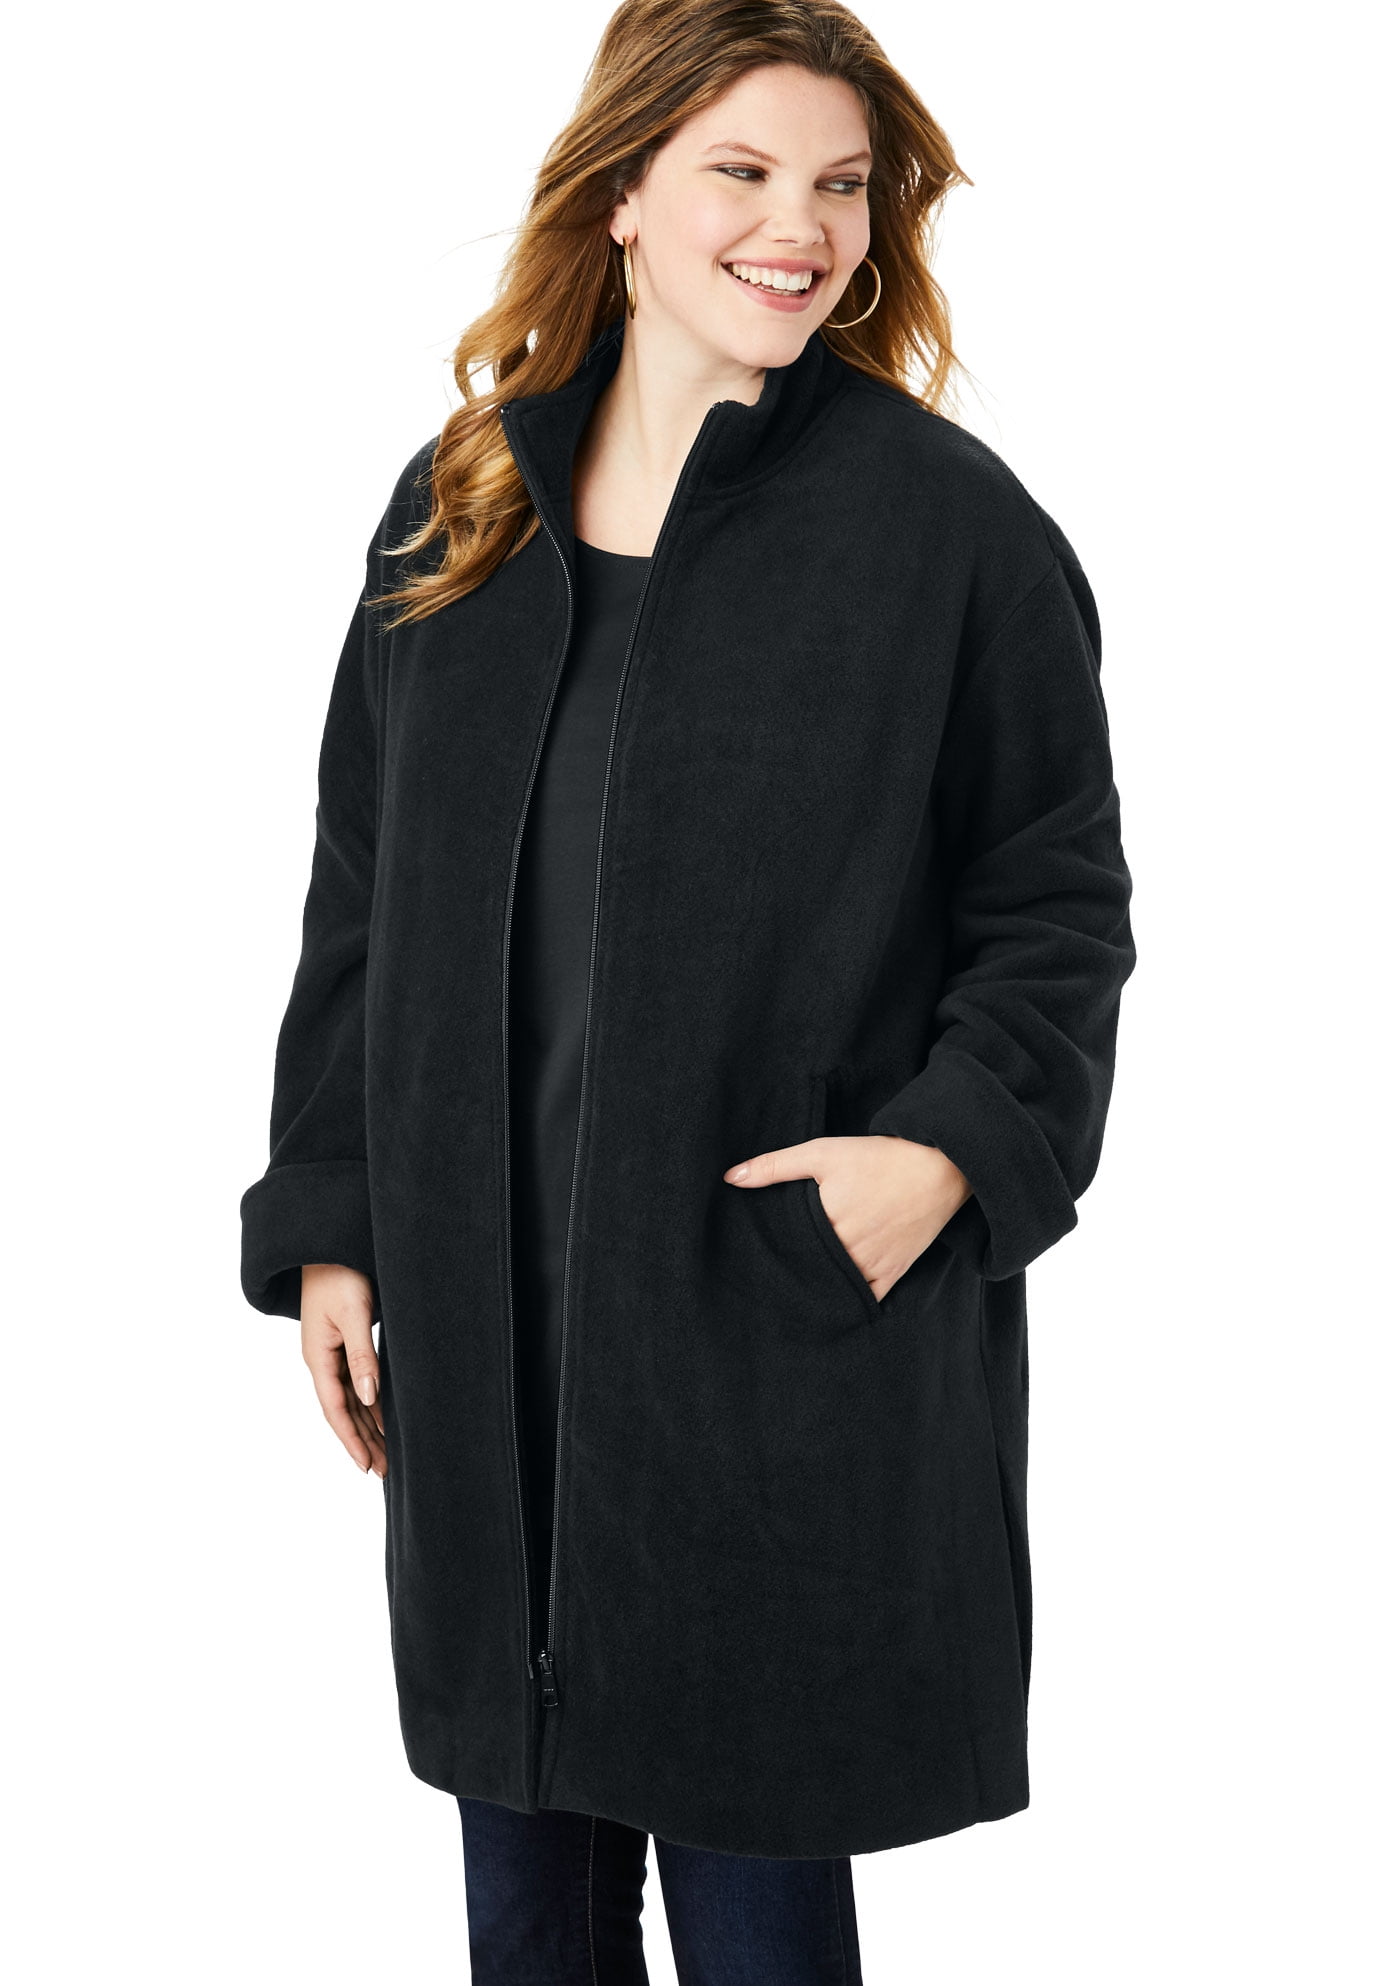 Roaman's - Roaman's Women's Plus Size Plush Fleece Driving Coat Jacket ...